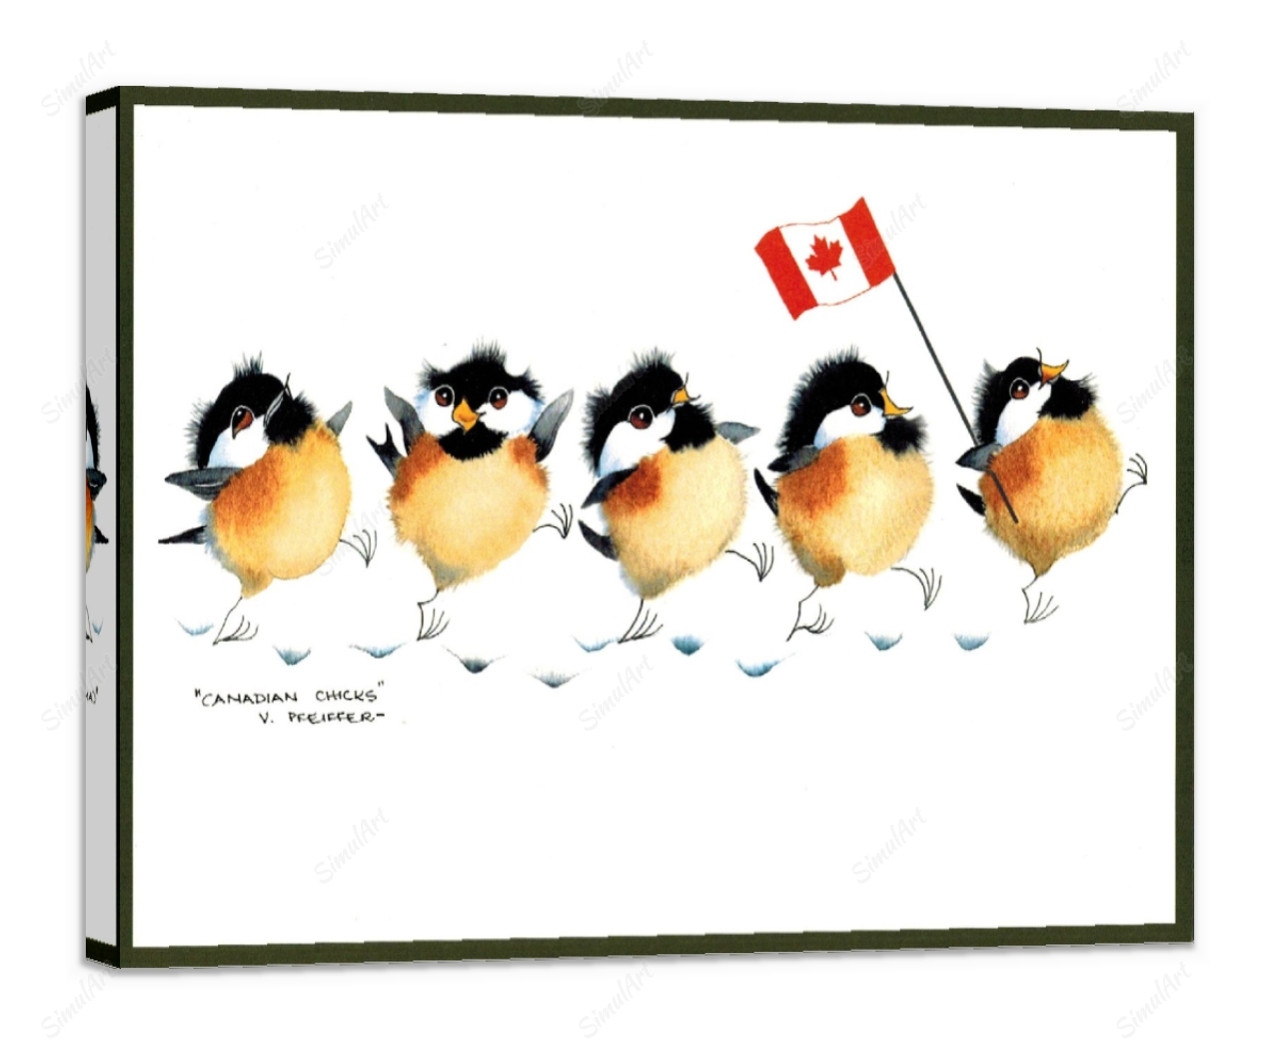 Canadian Chicks 823133 - 